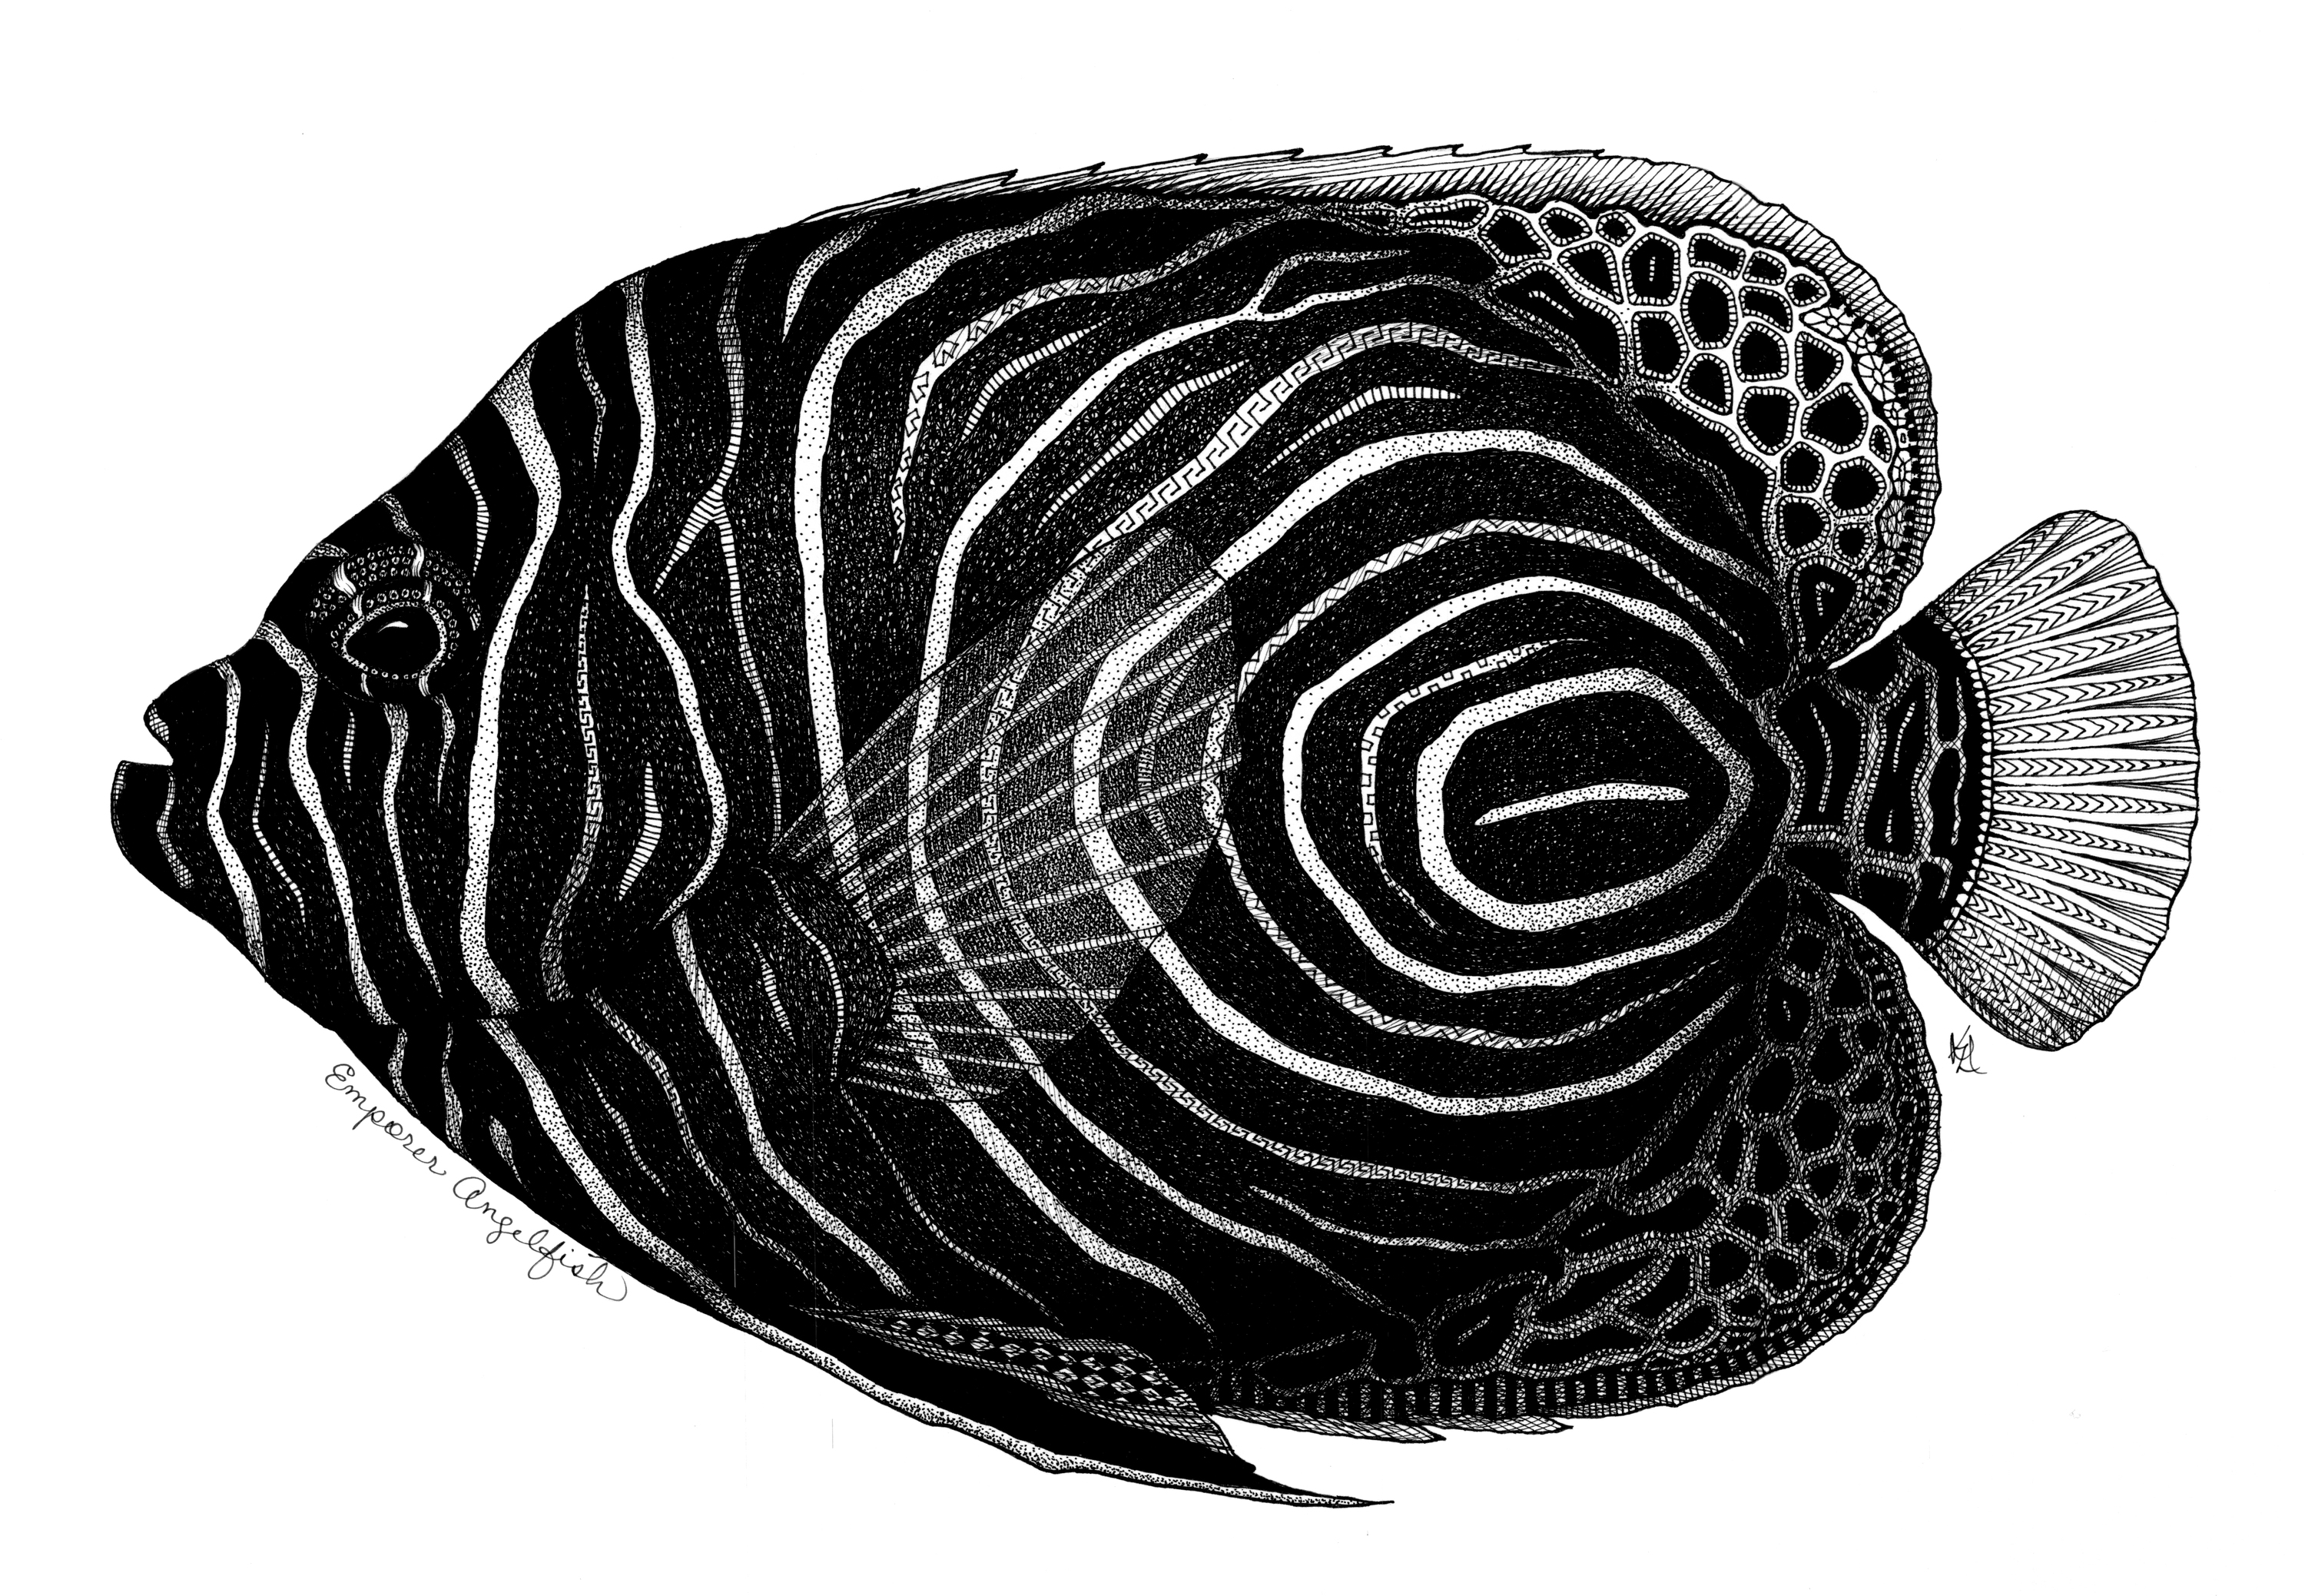 Emporer angelfish nucbpq